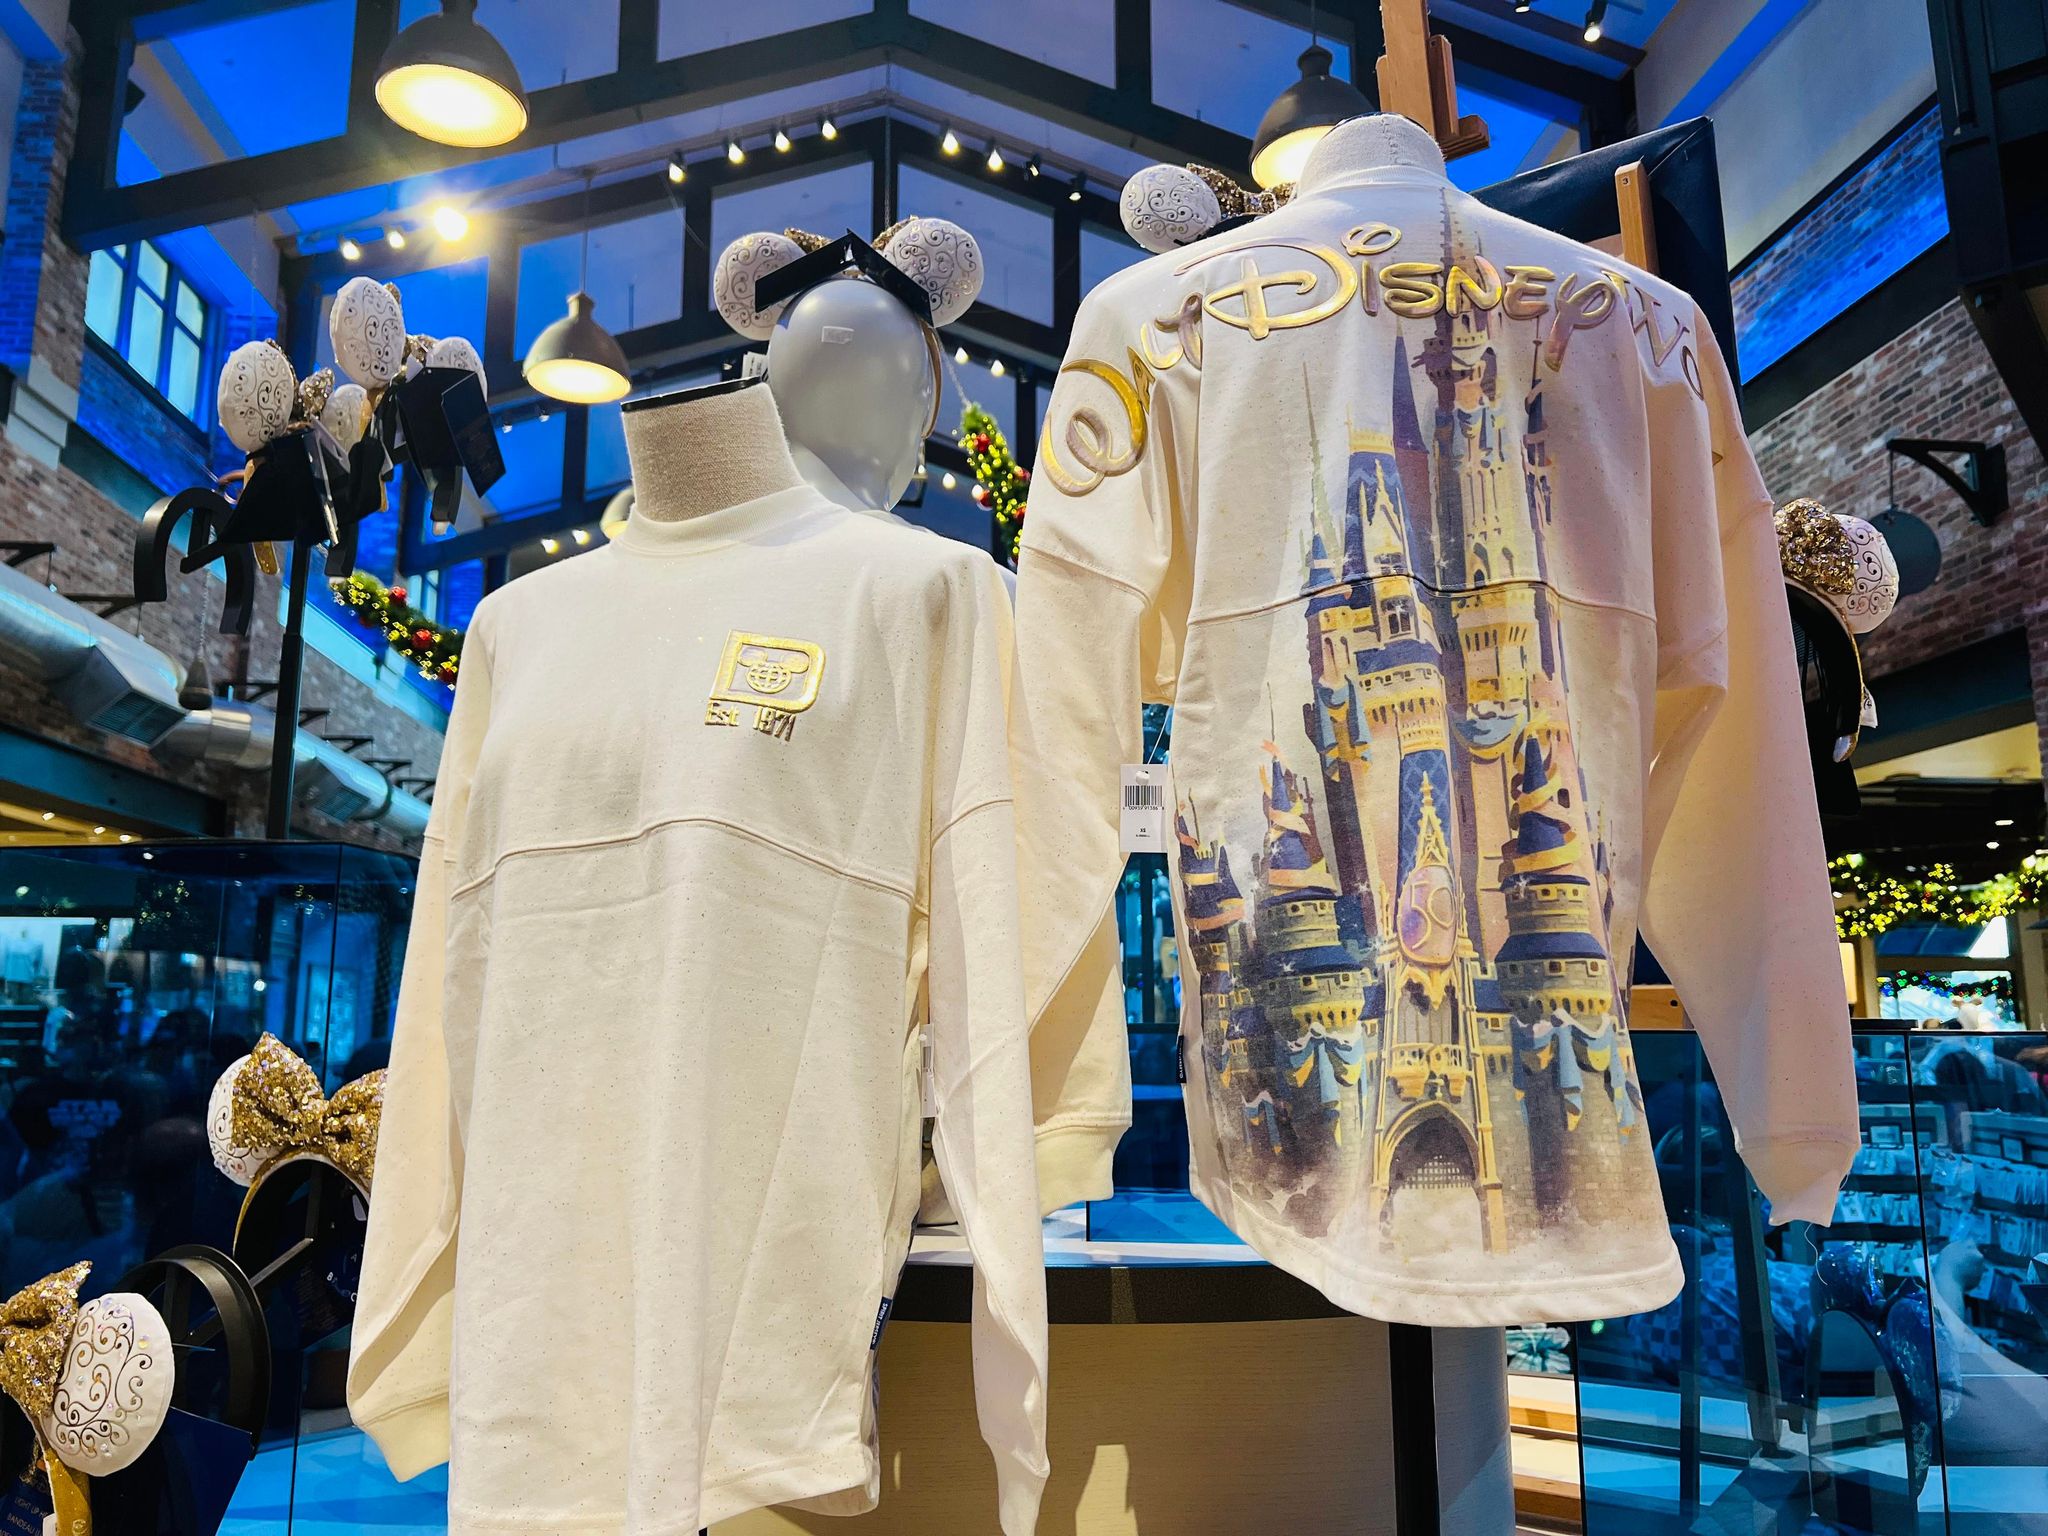 We Found the New 50th Anniversary Spirit Jersey at World of Disney 